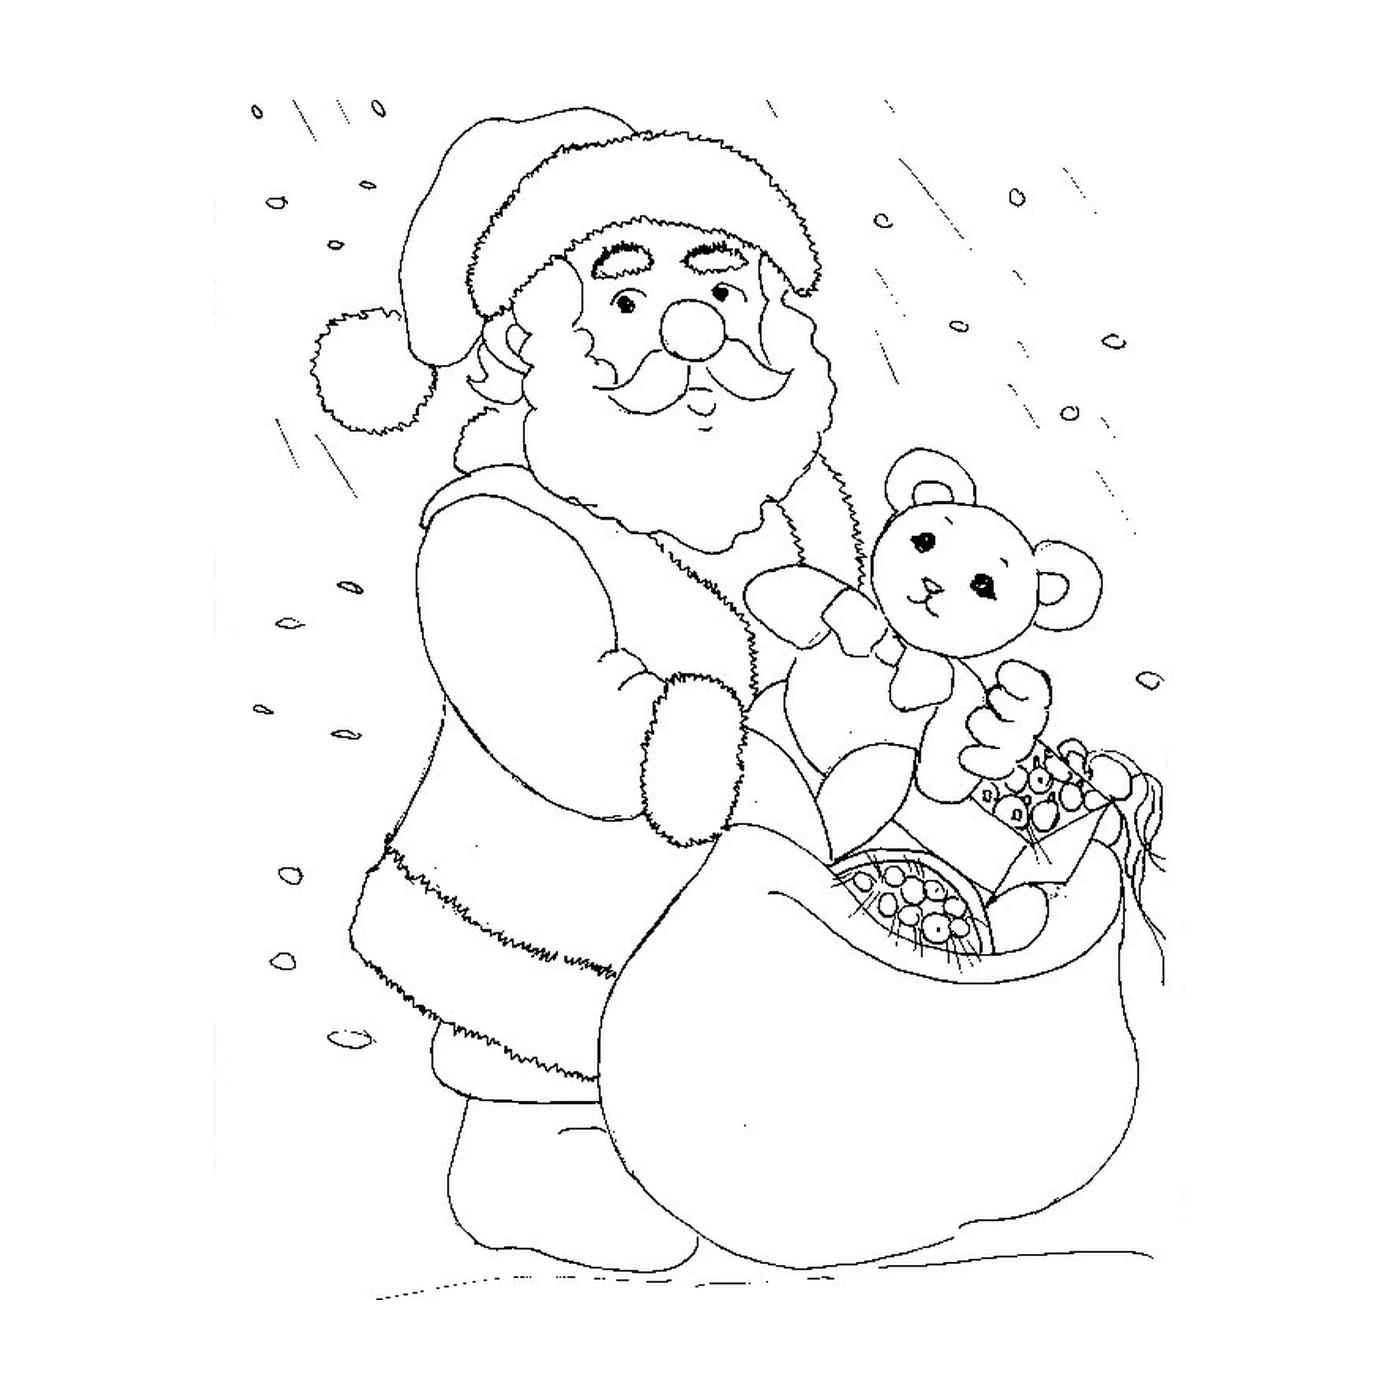  Babbo Natale con un orsacchiotto 